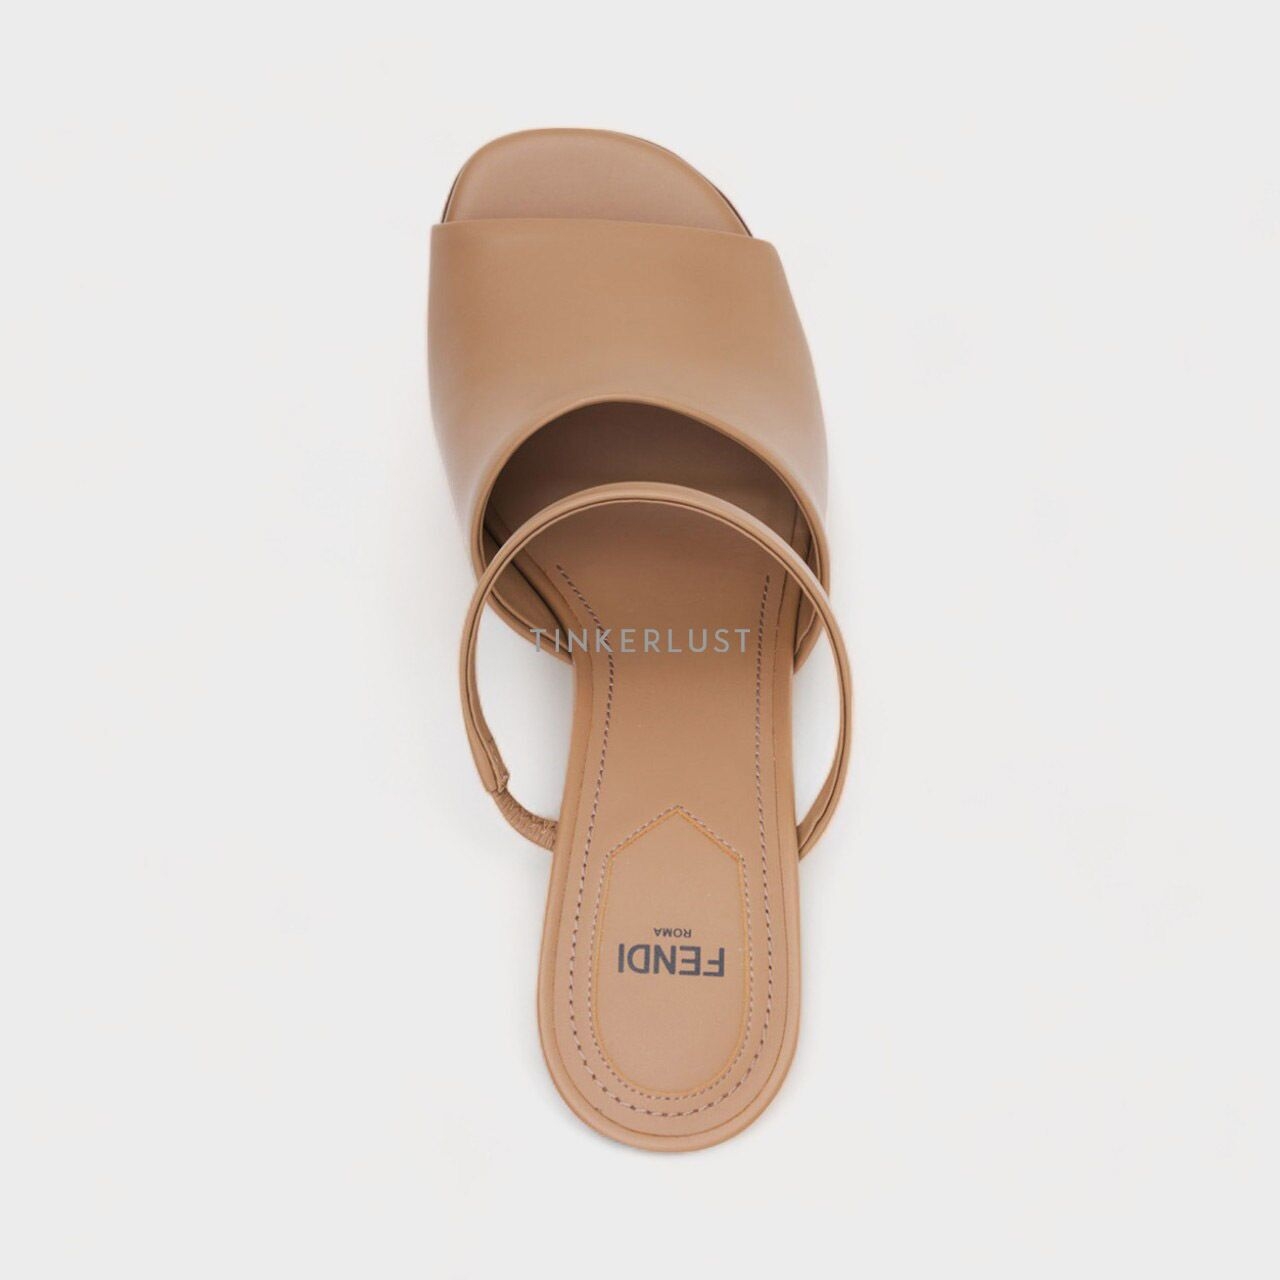 FENDI Women First Open Toe Sandals 105mm in Beige Leather with Diagonal F-Shaped Heels